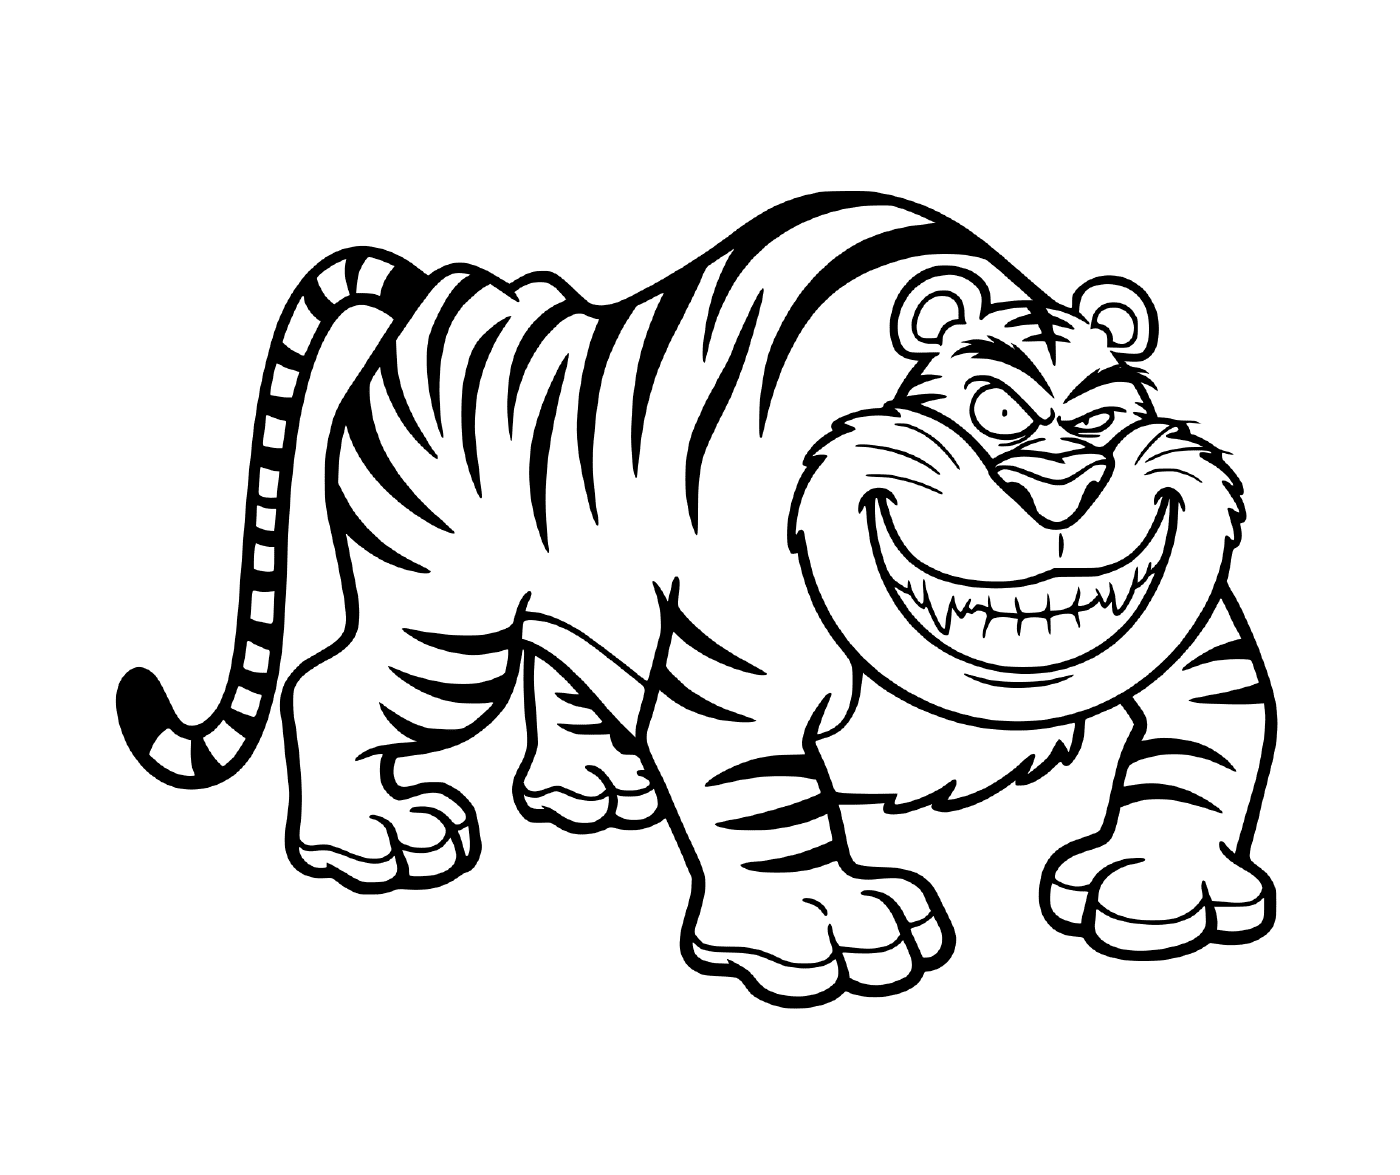  Un divertido tigre de dibujos animados 